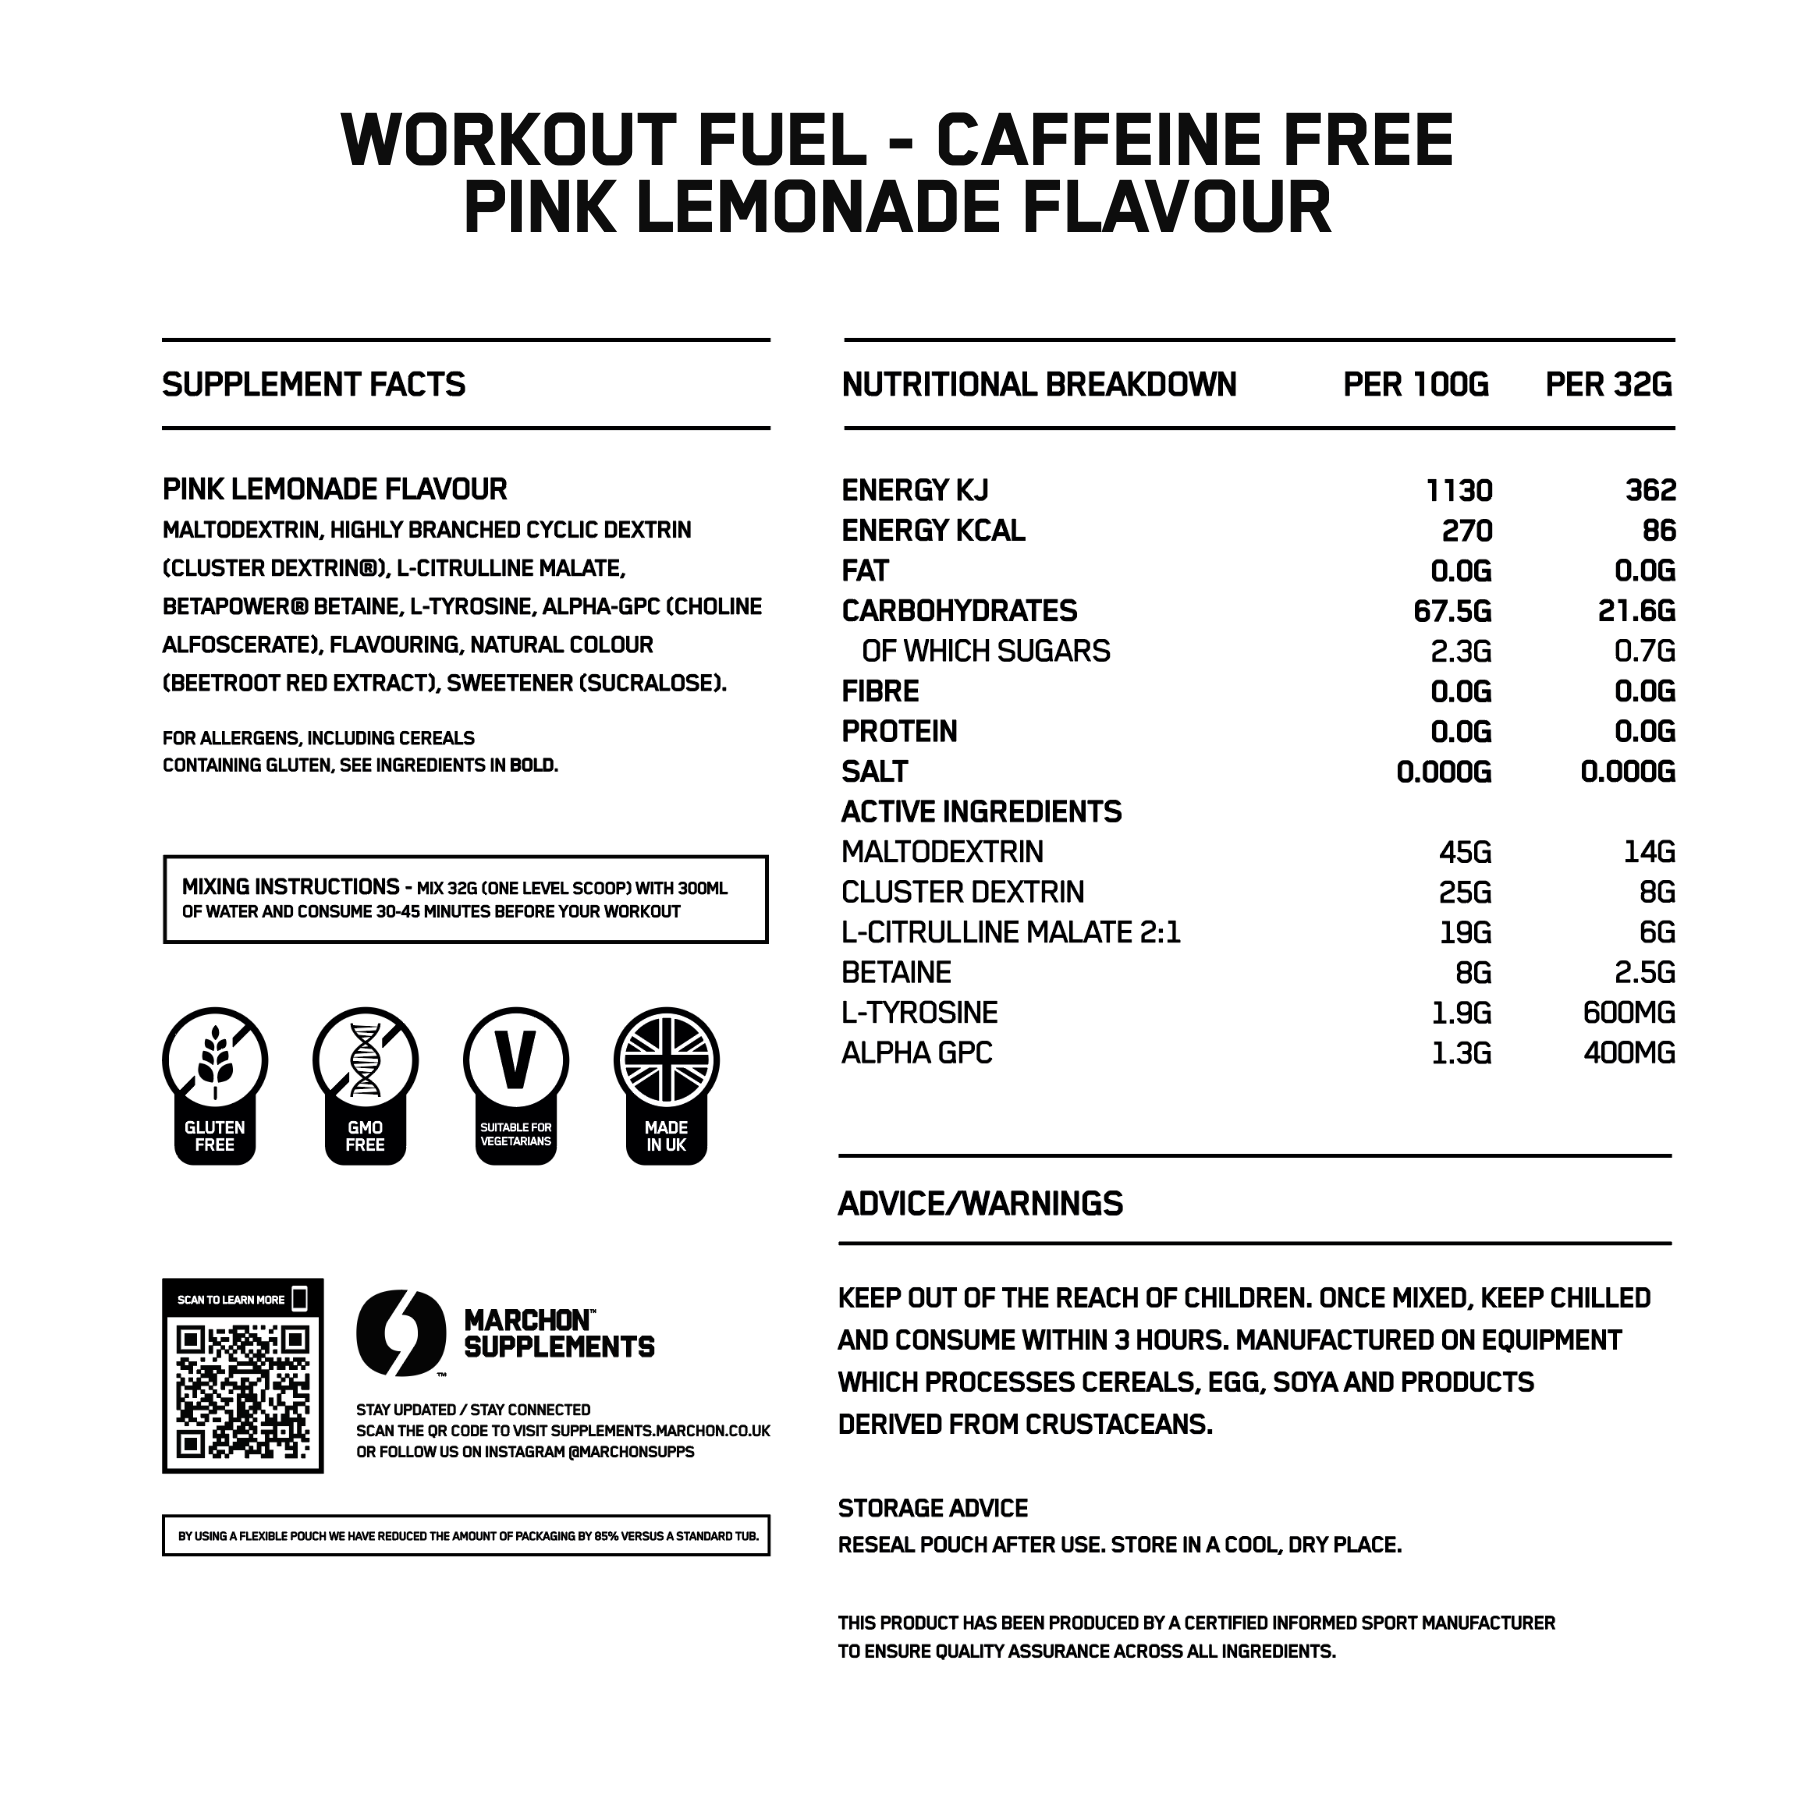 Workout Fuel - Caffeine Free